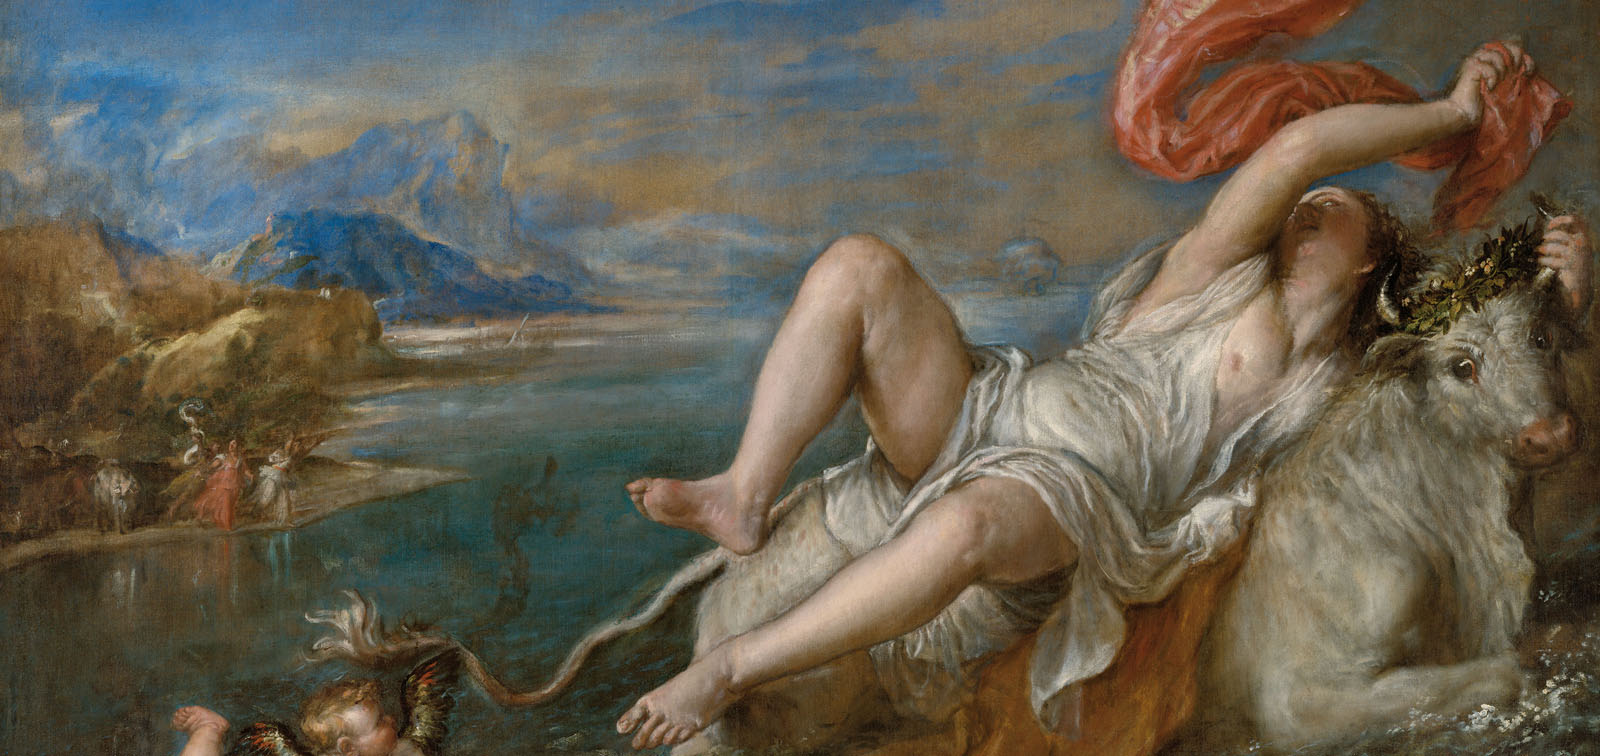 Mythological Passions: Tiziano, Veronese, Allori, Rubens, Ribera, Poussin, Van Dyck, Velázquez